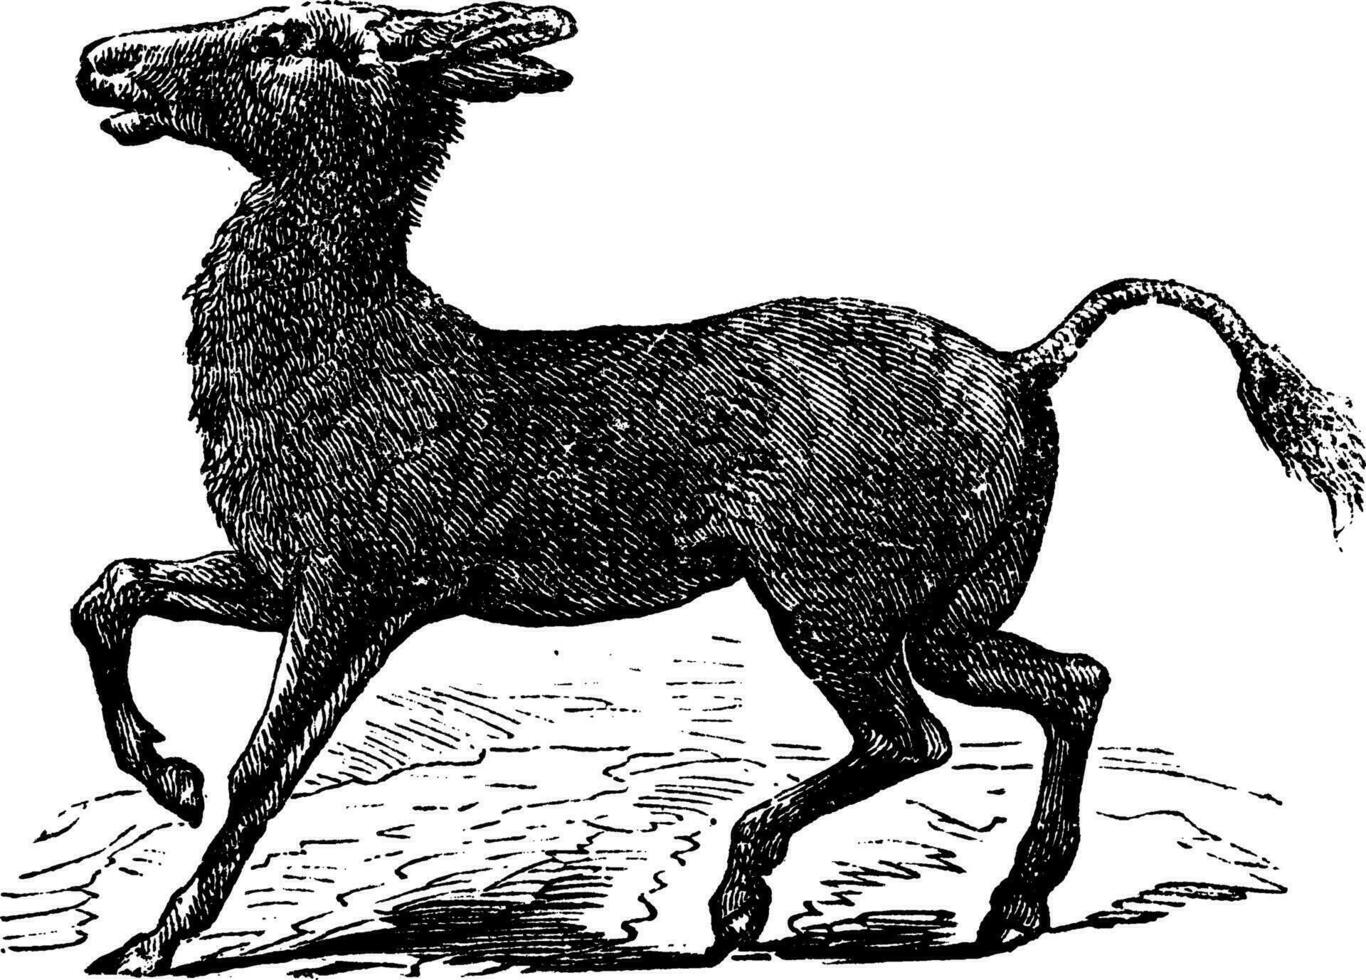 Mongolian Wild Ass or Khulan or Equus hemionus, vintage engraving vector